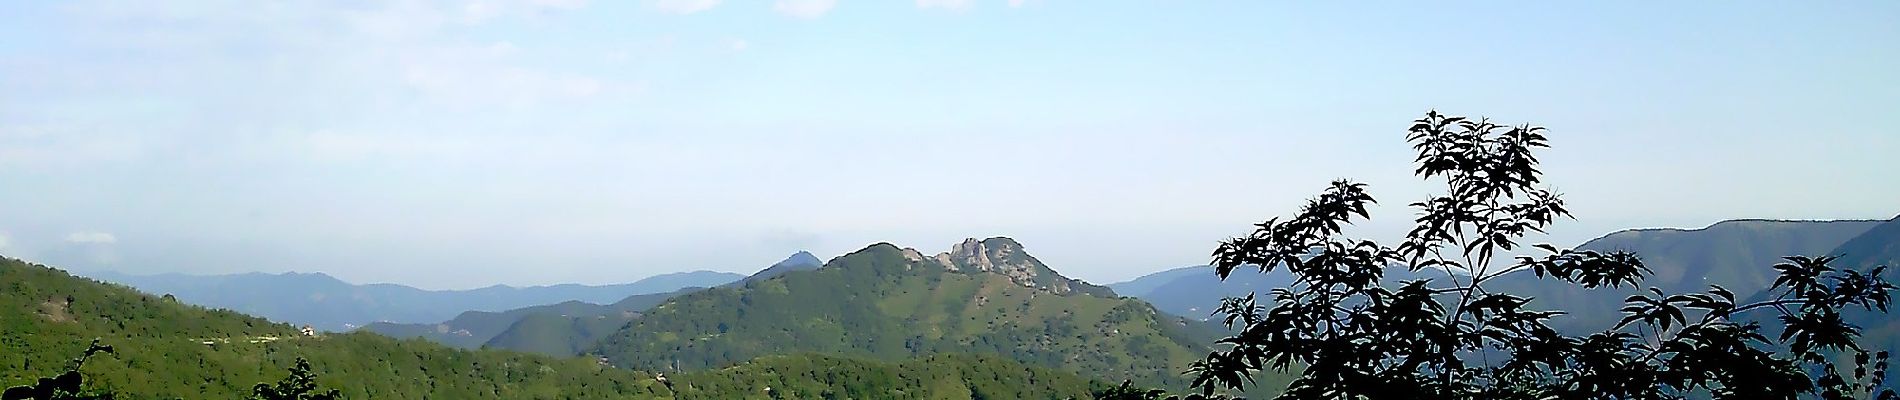 Randonnée A pied Valbrevenna - Pochettini - Monte Schigonzo - Monte Cugno - Photo